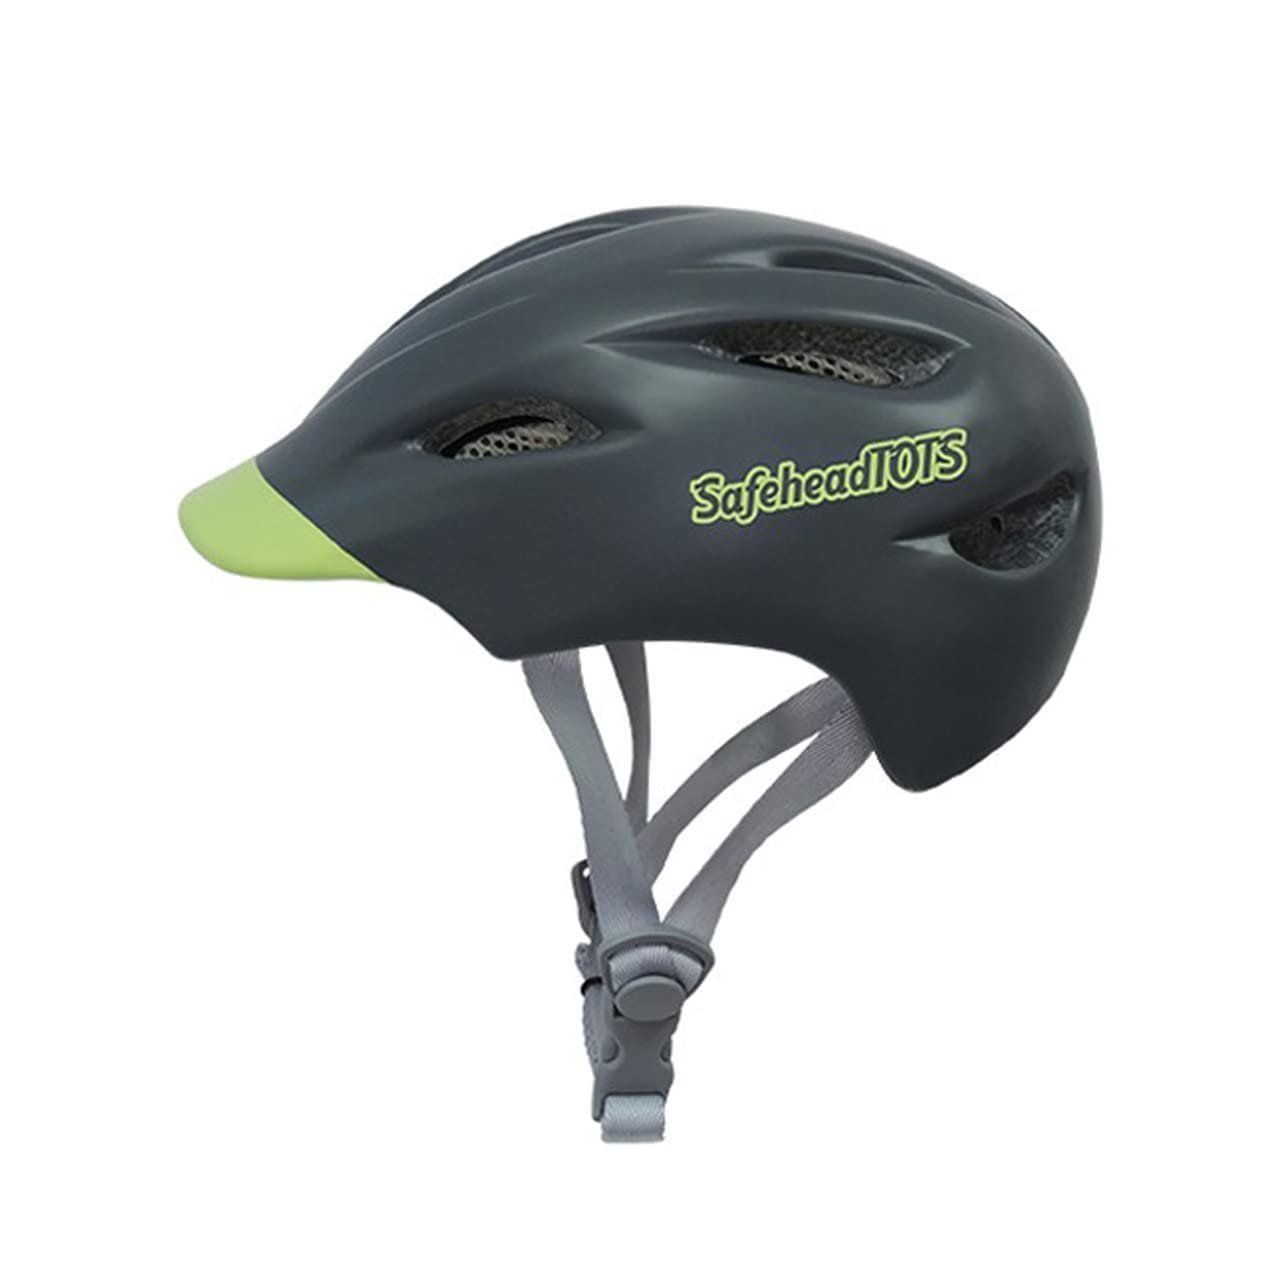 SafeheadTOTS Grey Green XS Baby Helmet - FREE Shipping & Returns - X-Small Size